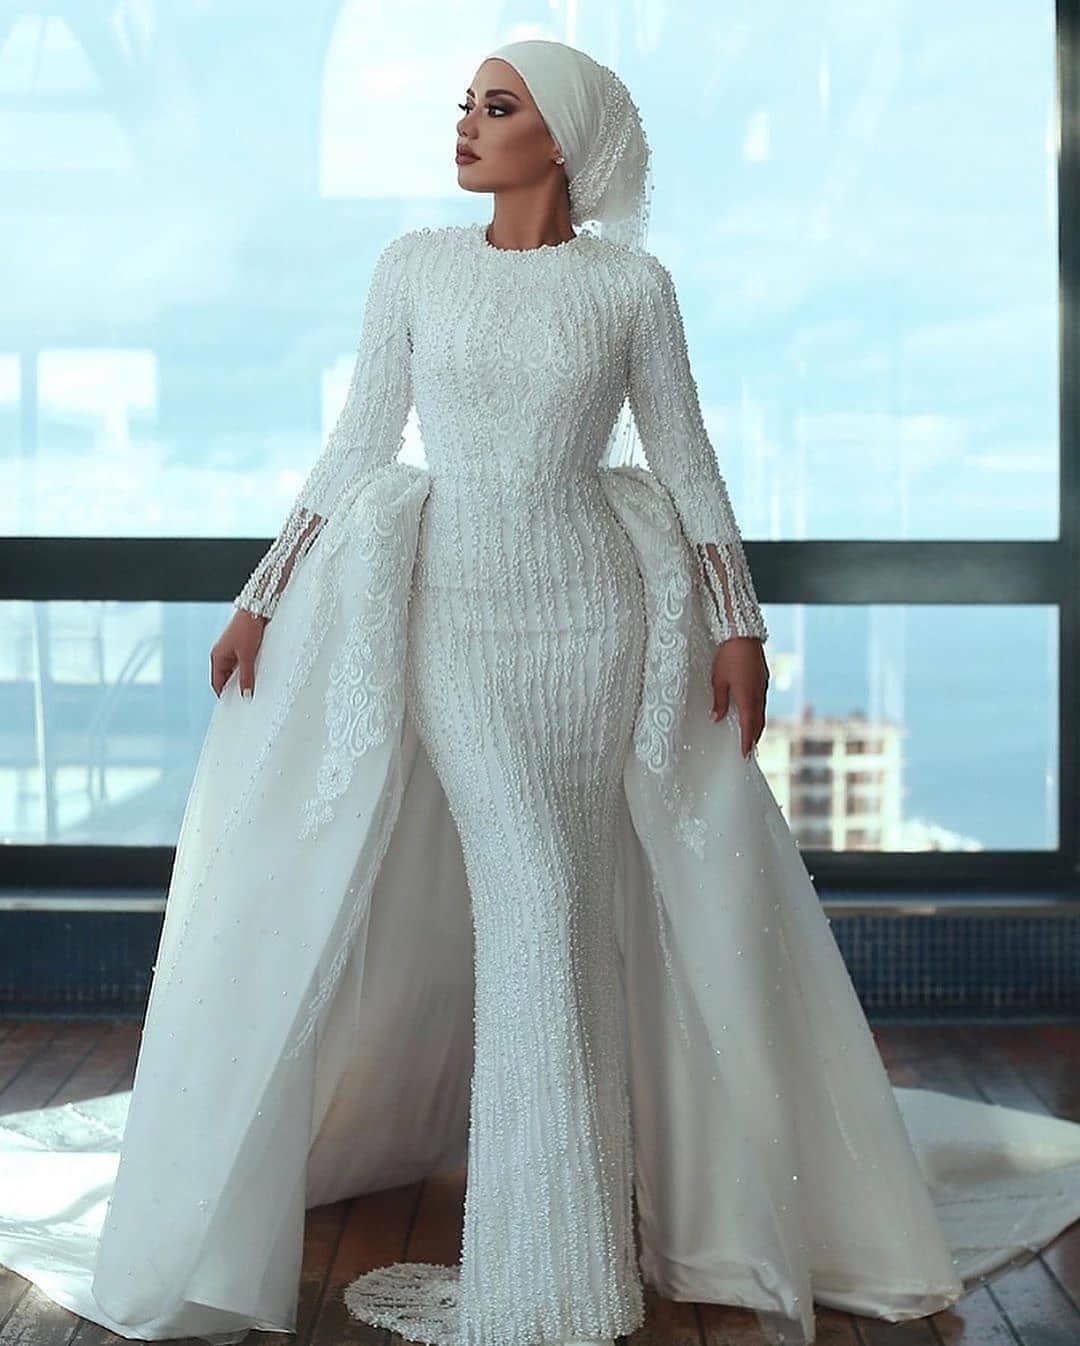 MOST FASHIONABLE AFRICA WEDDING DRESSES 2020 TRENDING STYLES -   style Hijab wedding